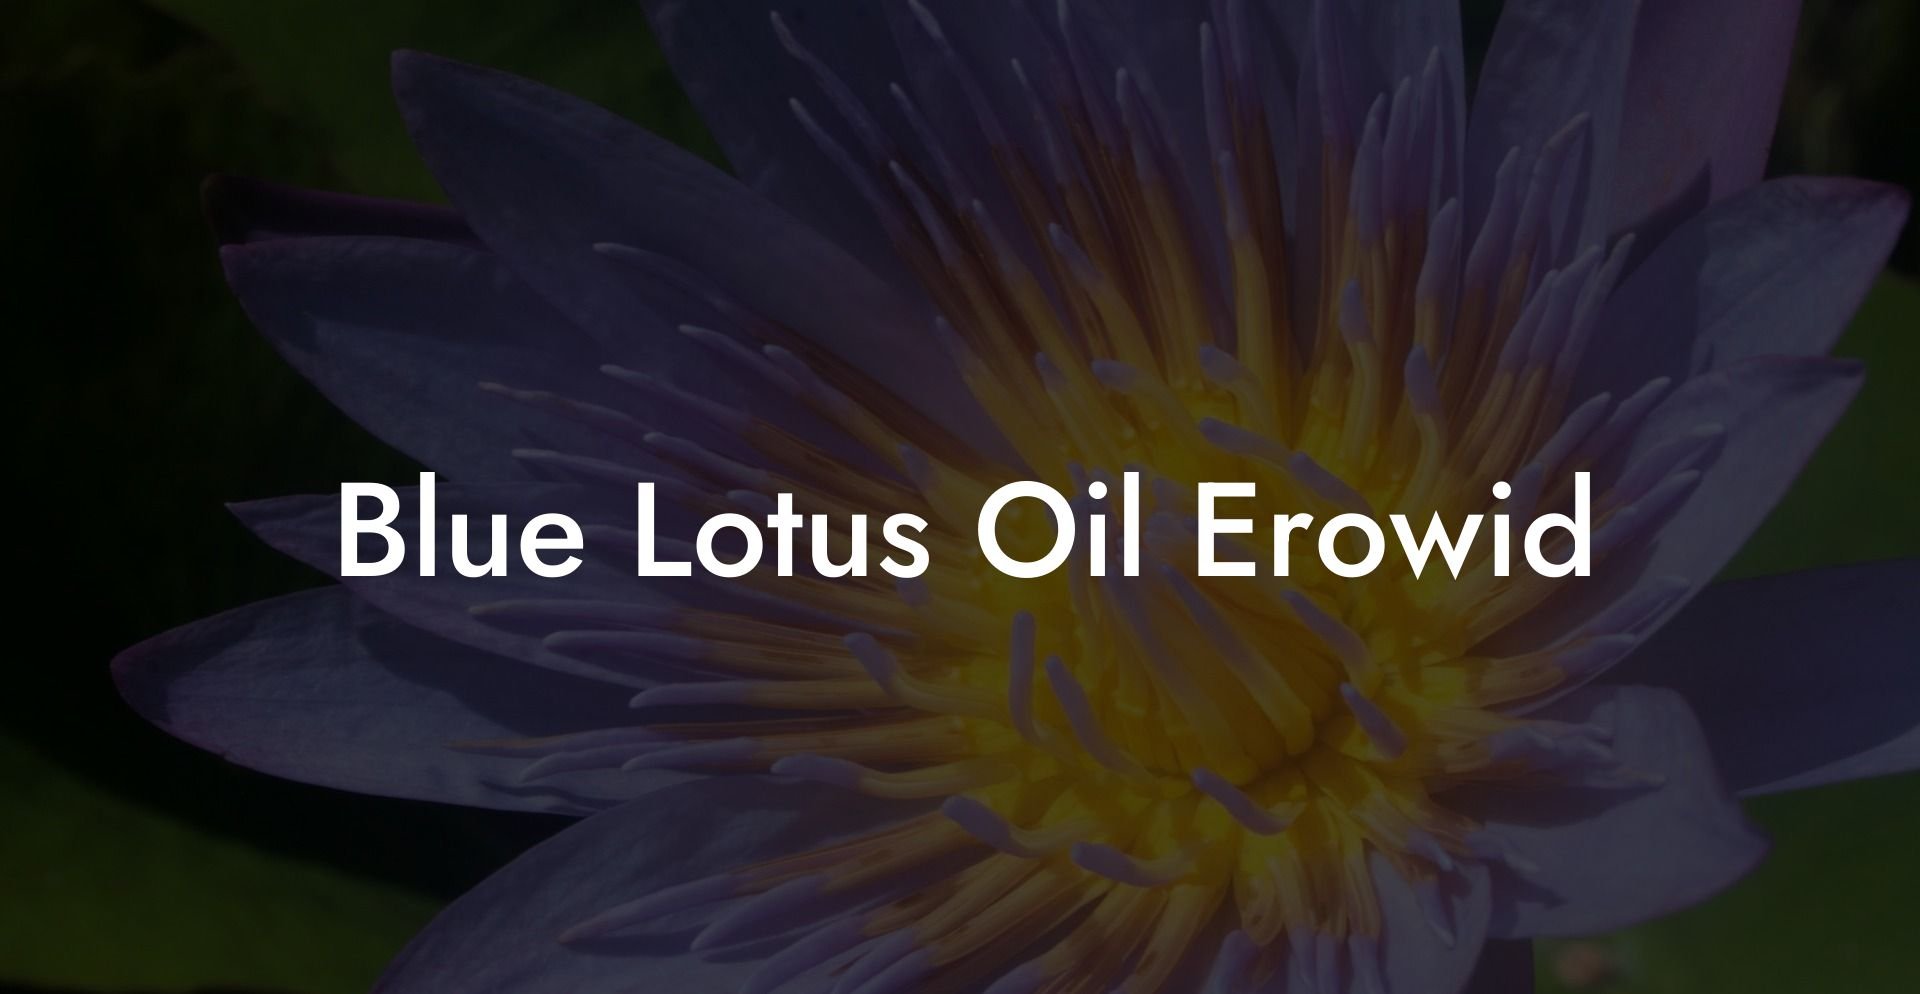 Blue Lotus Oil Erowid